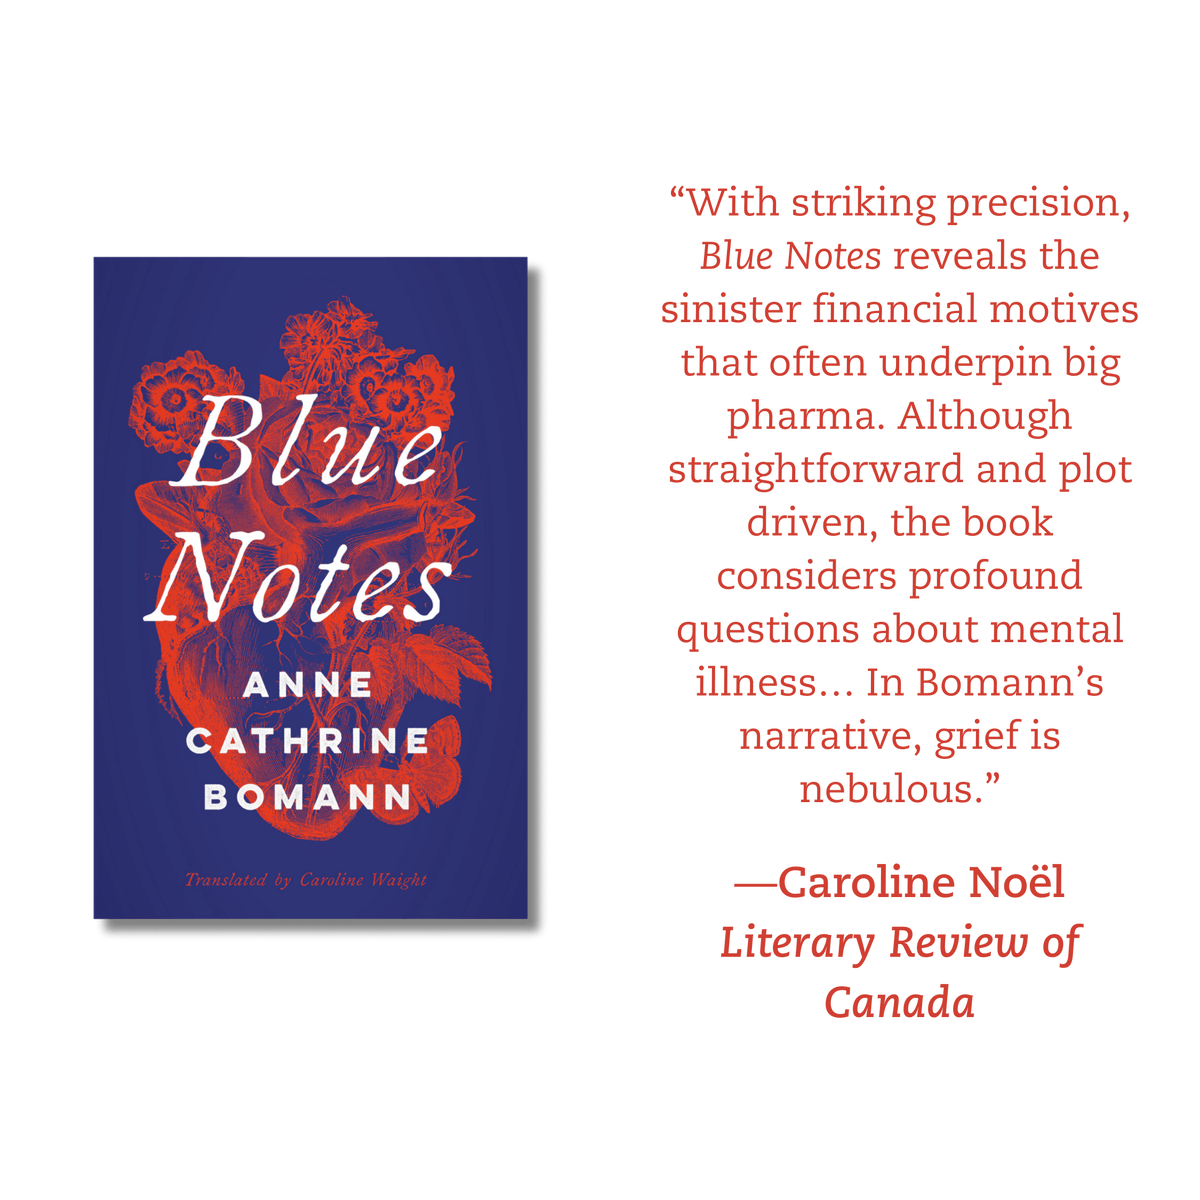 For @reviewcanada, Caroline Noël reviews Blue Notes by Anne Cathrine Bomann, translated by Caroline Waight: reviewcanada.substack.com/p/bookworm-no-…